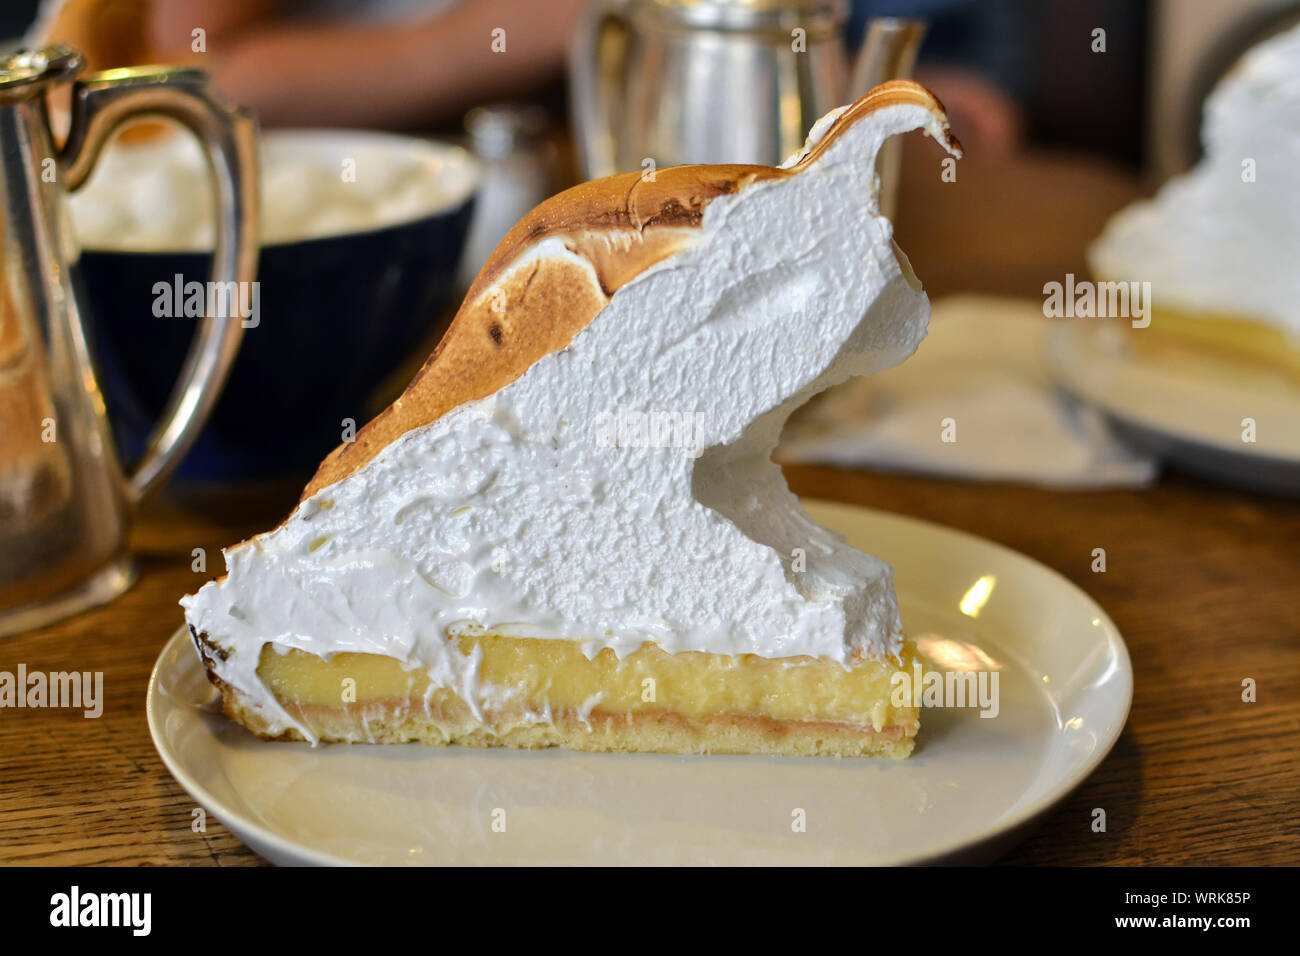 Gigantesco trozo de delicioso pastel de merengue de limón sobre la mesa de madera en un café. Foto de stock